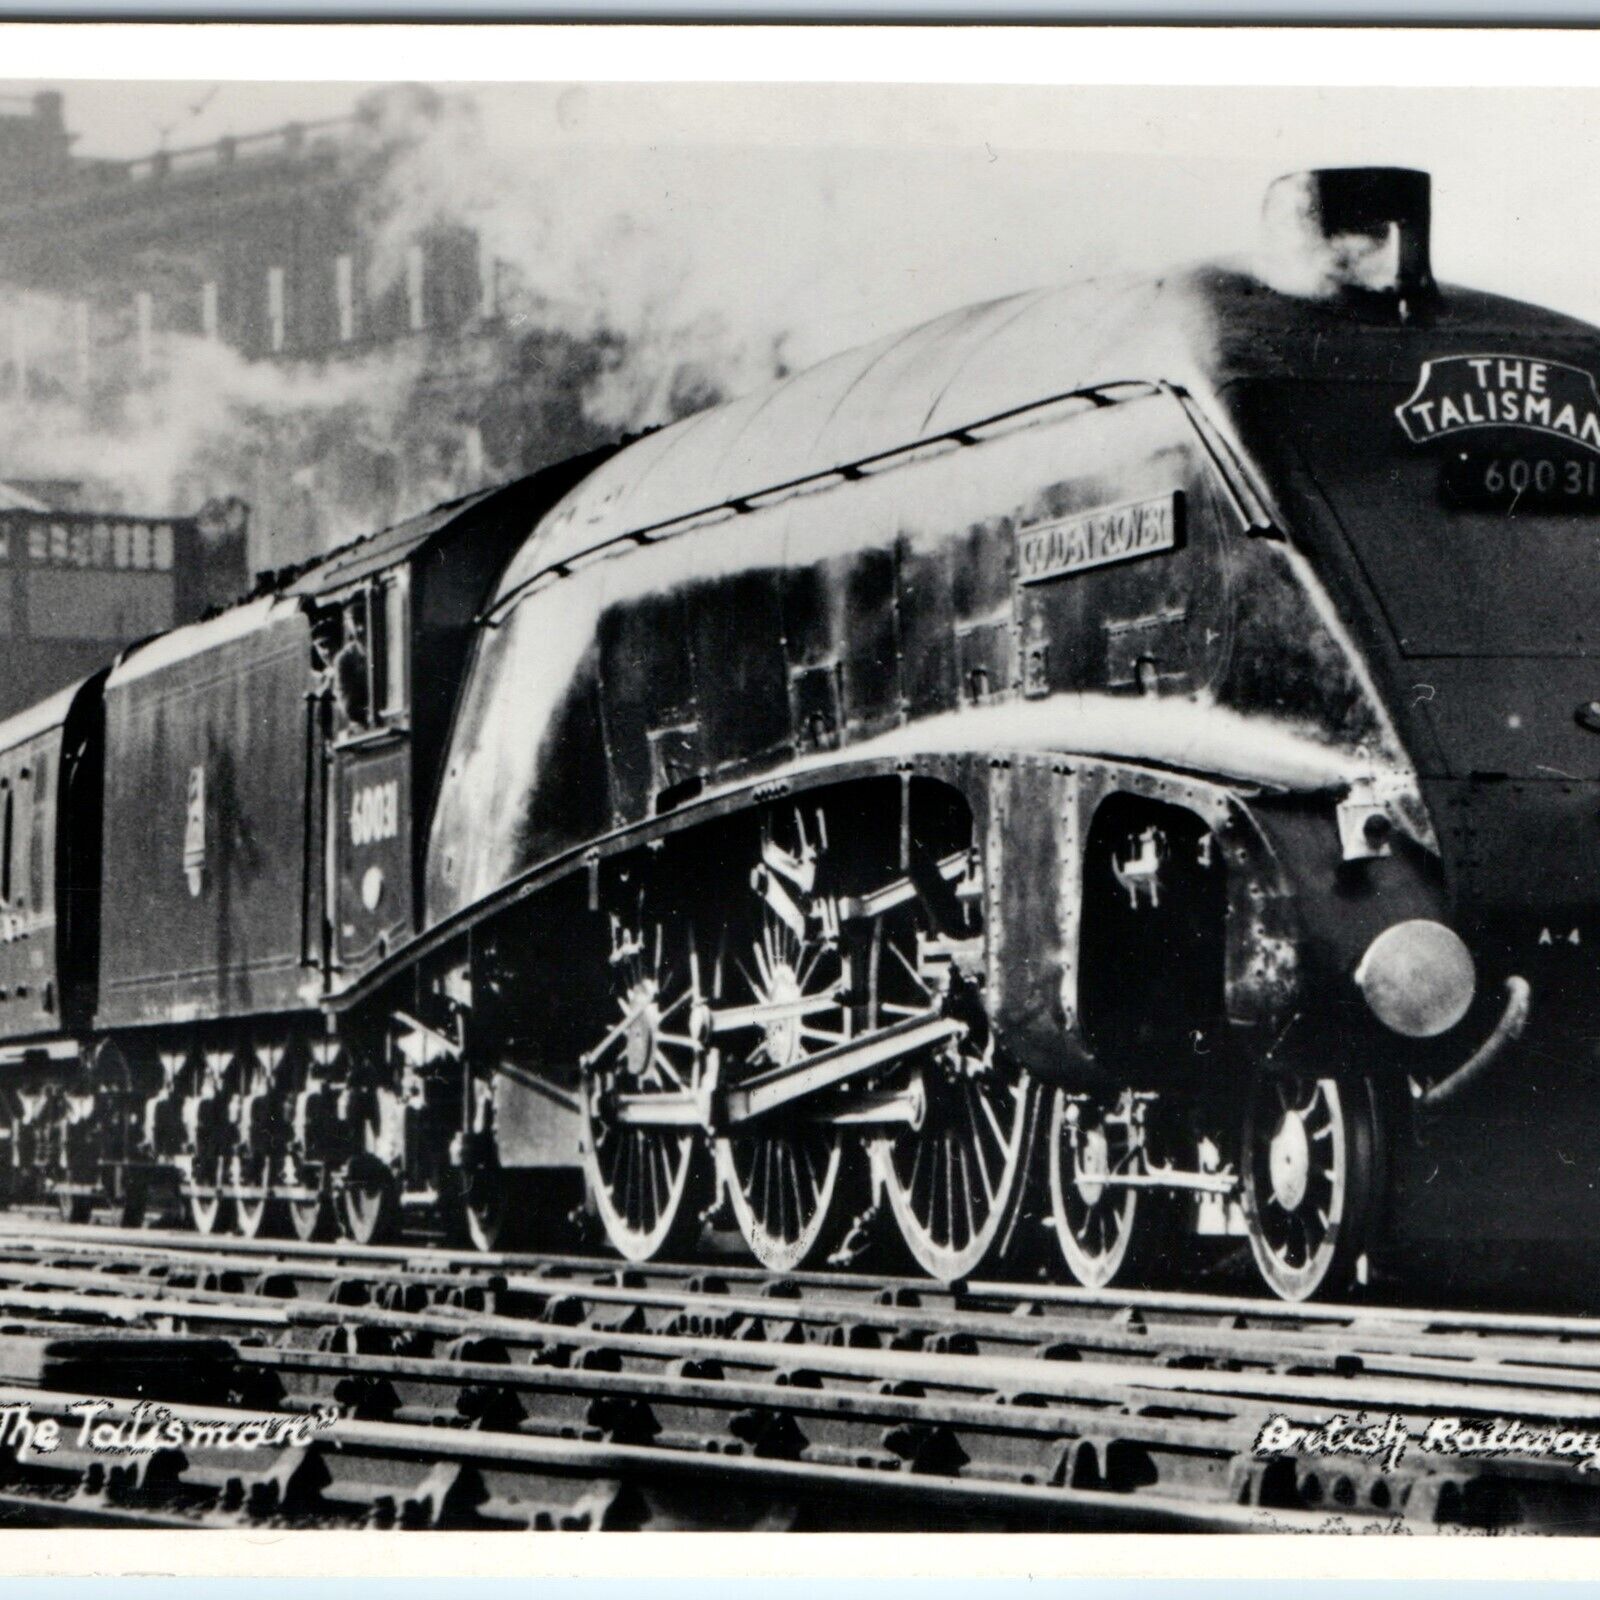 c1940s British Railways RPPC The Talisman #60031 Train Locomotive Art Deco A244